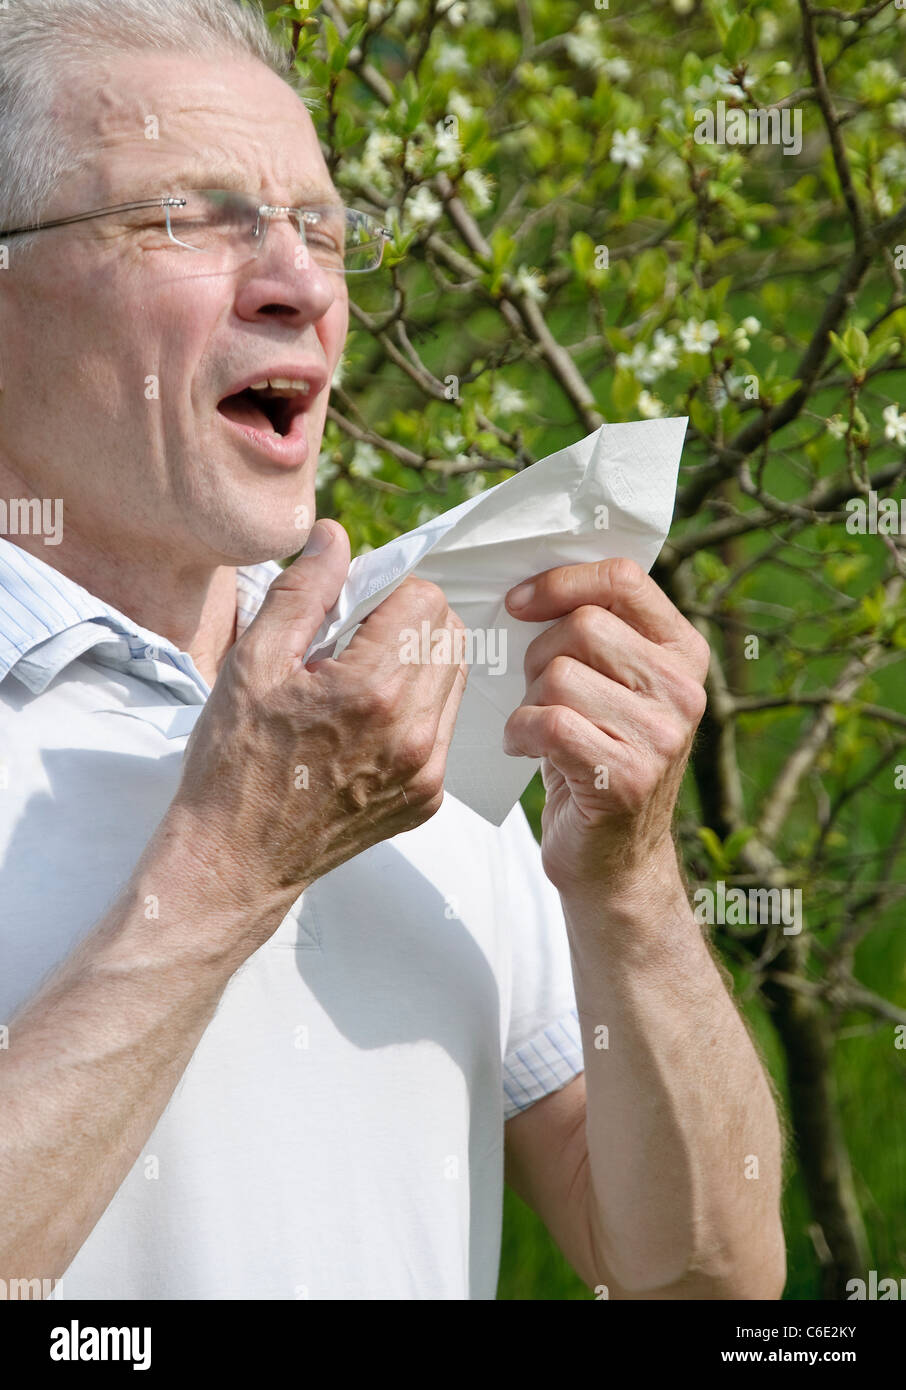 Sneezing man with handkerchief, hay fever, allergies Stock Photo